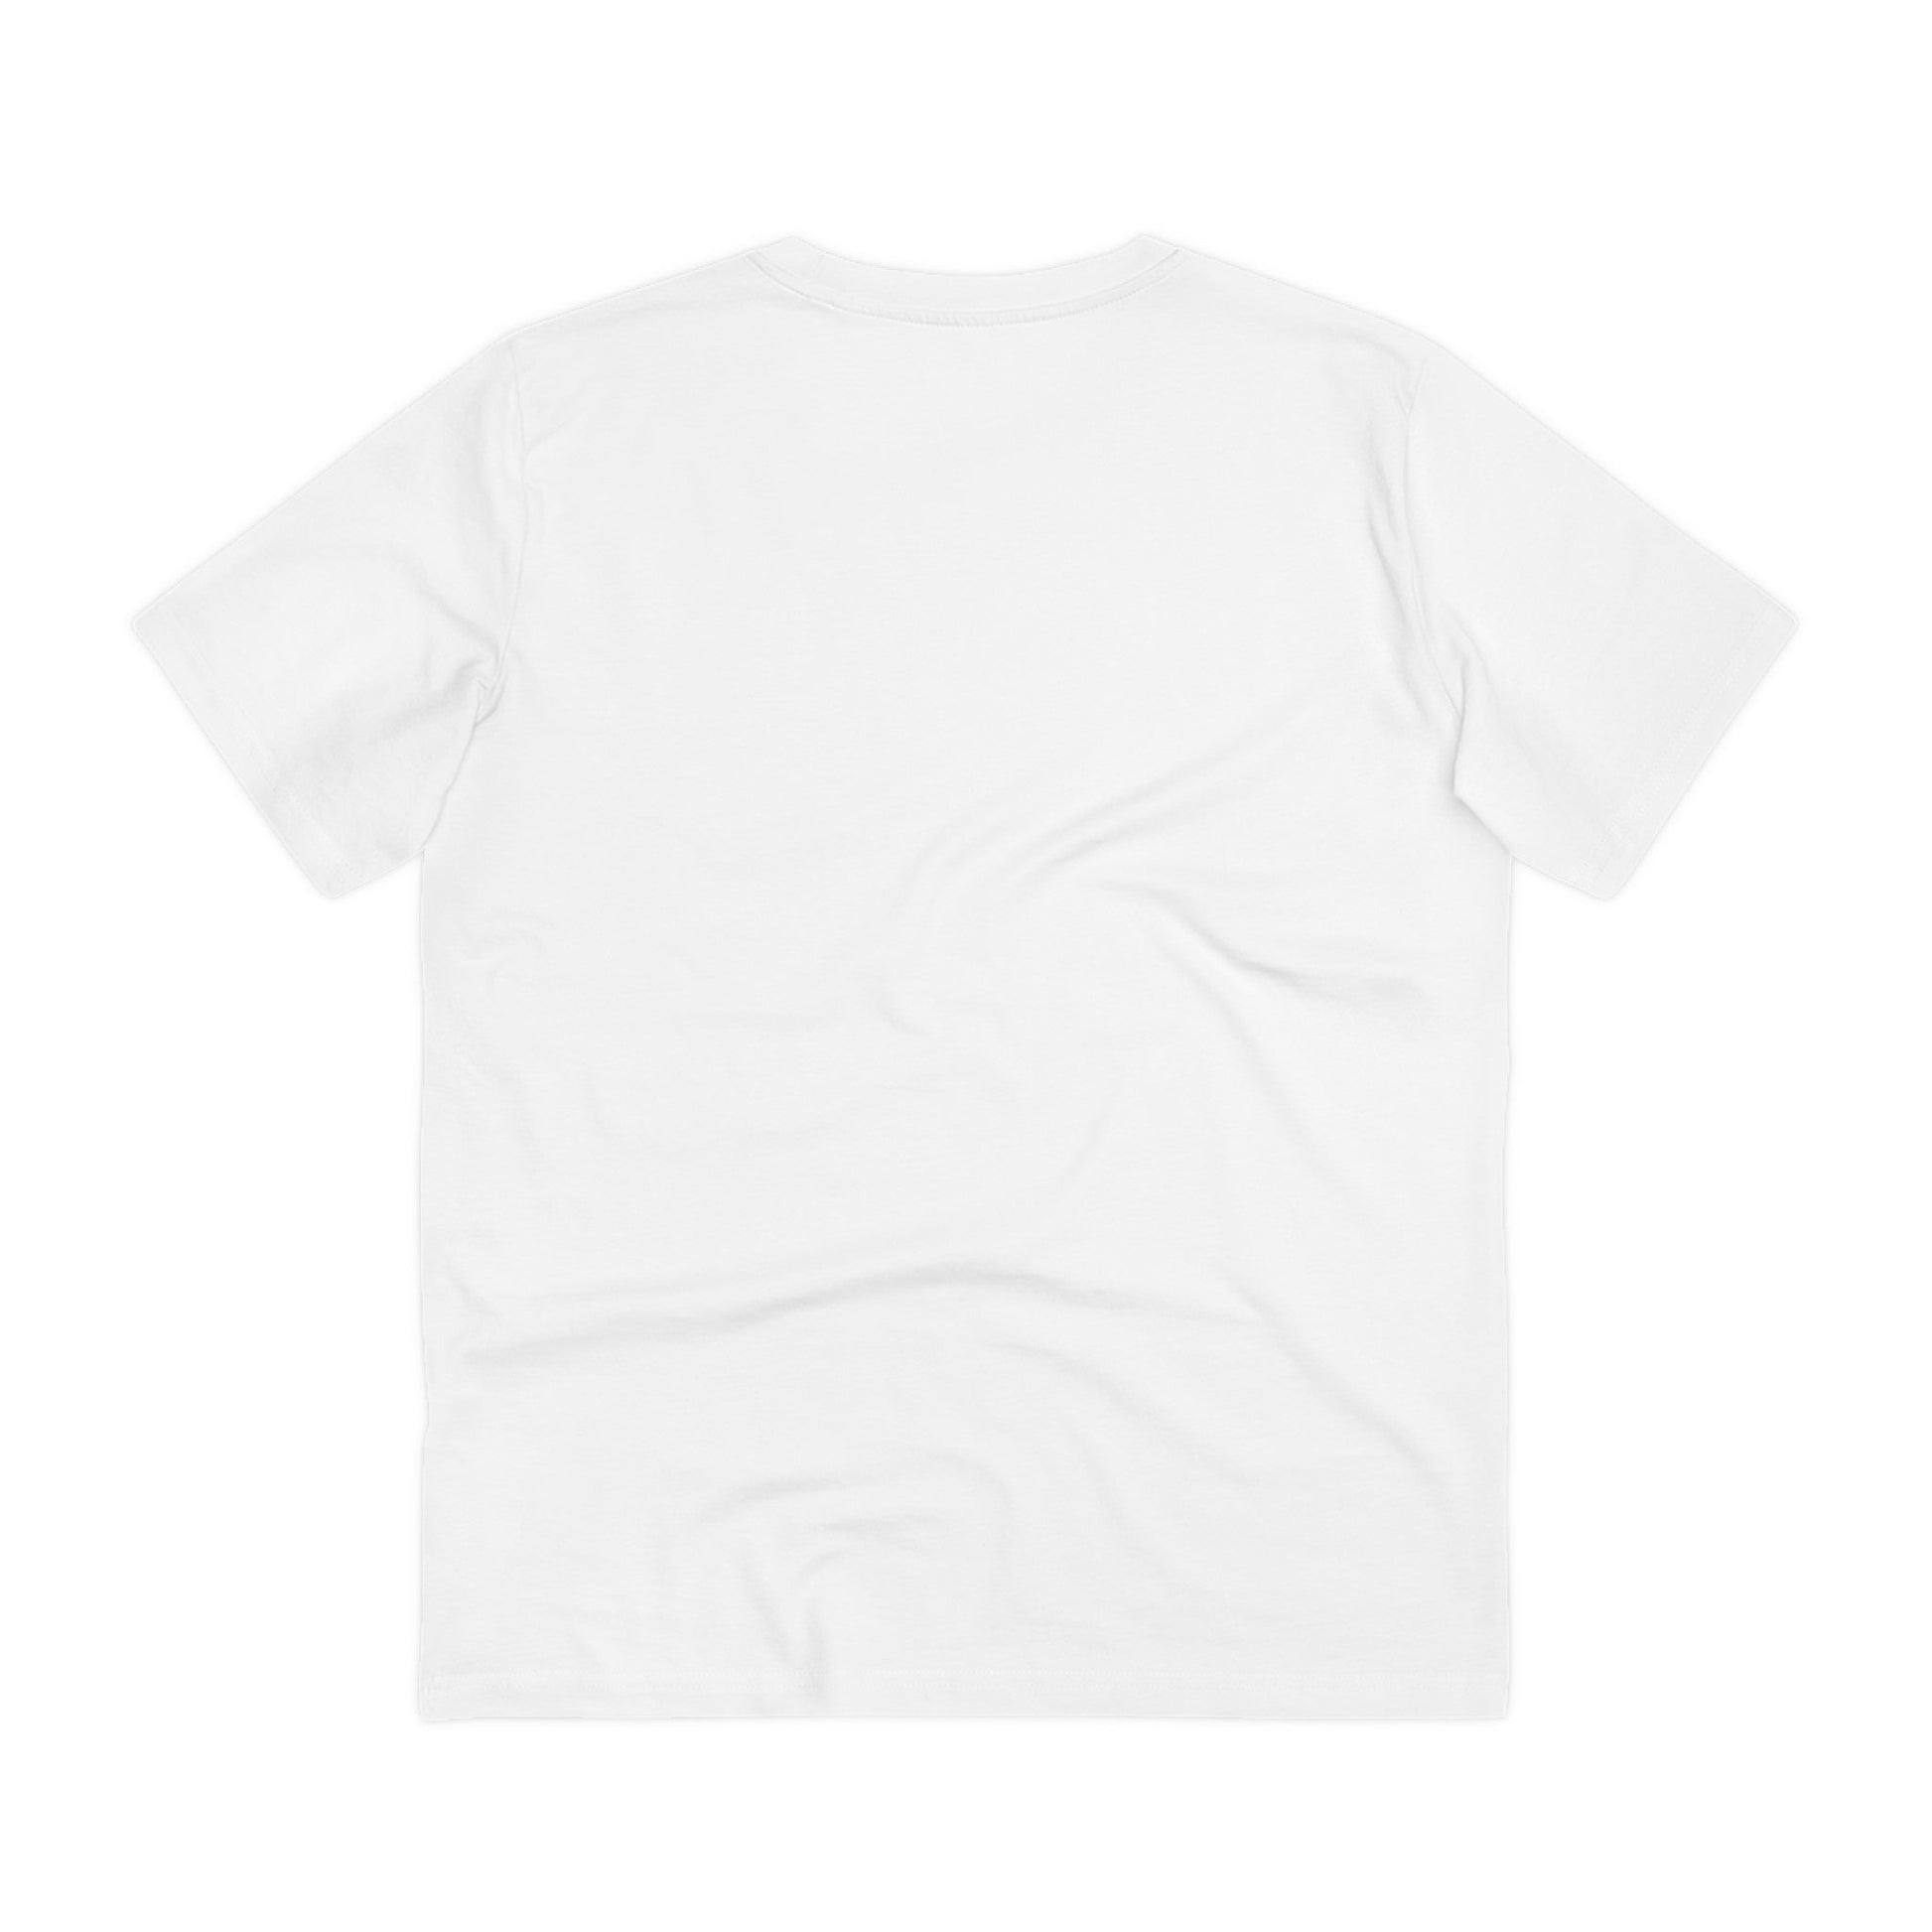 Printify T-Shirt Viking - Rubber Duck - Front Design